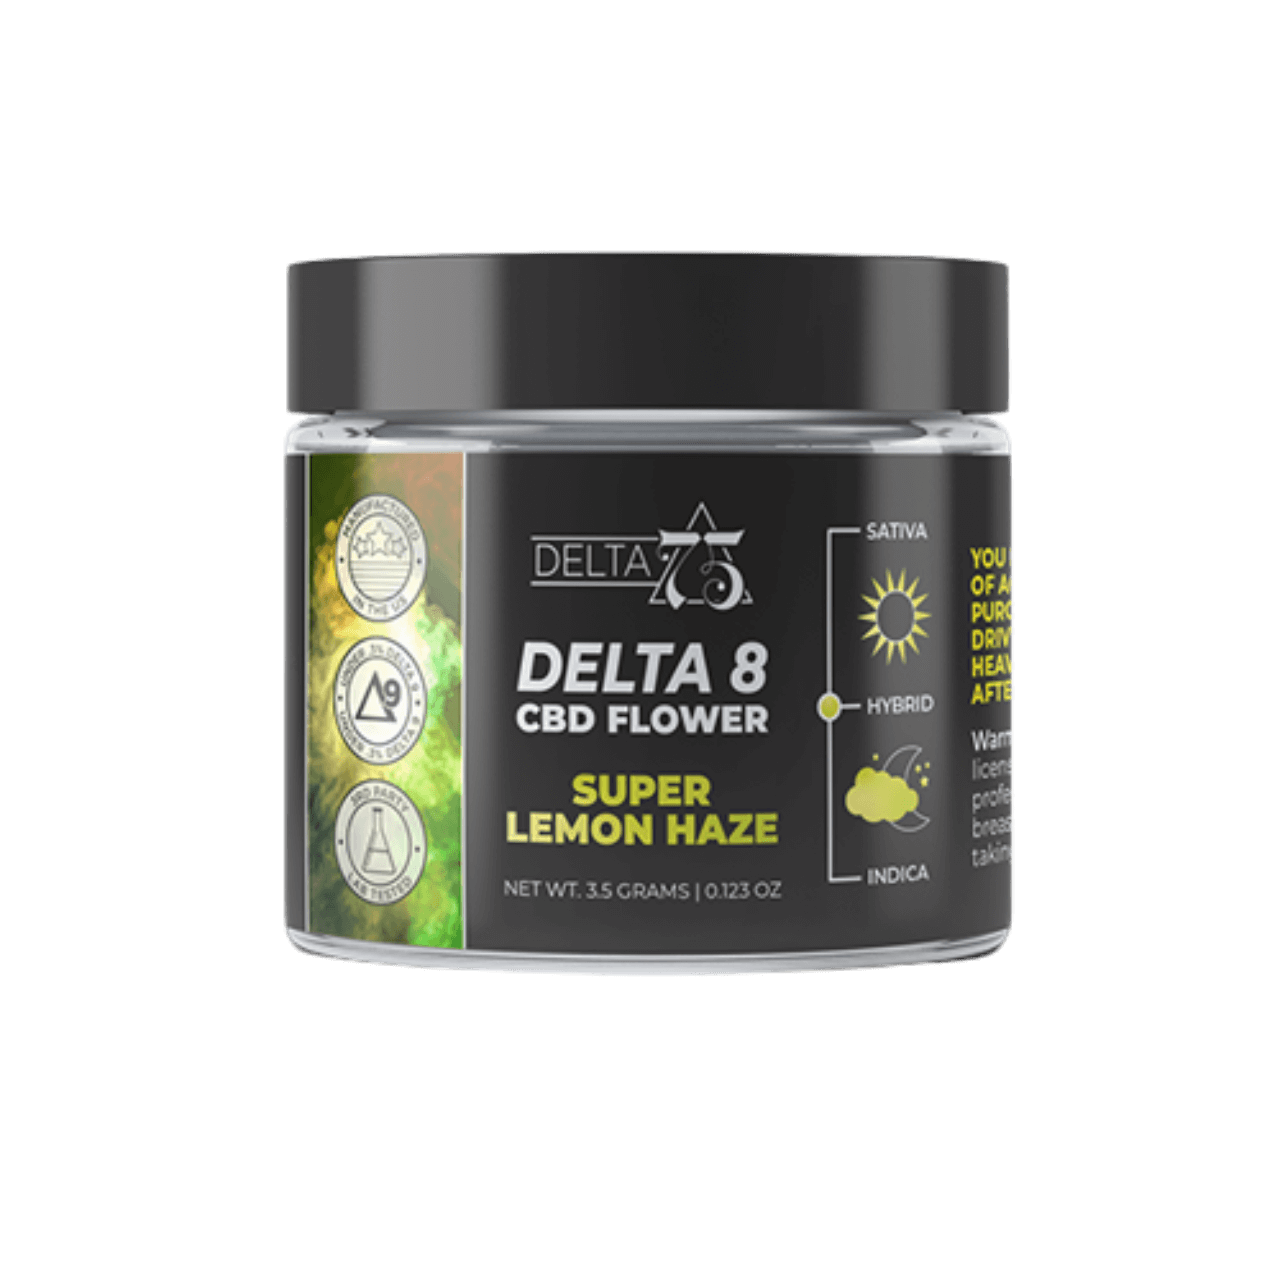 Delta 75 Super Lemon Haze Delta 8 CBD Hemp Flower